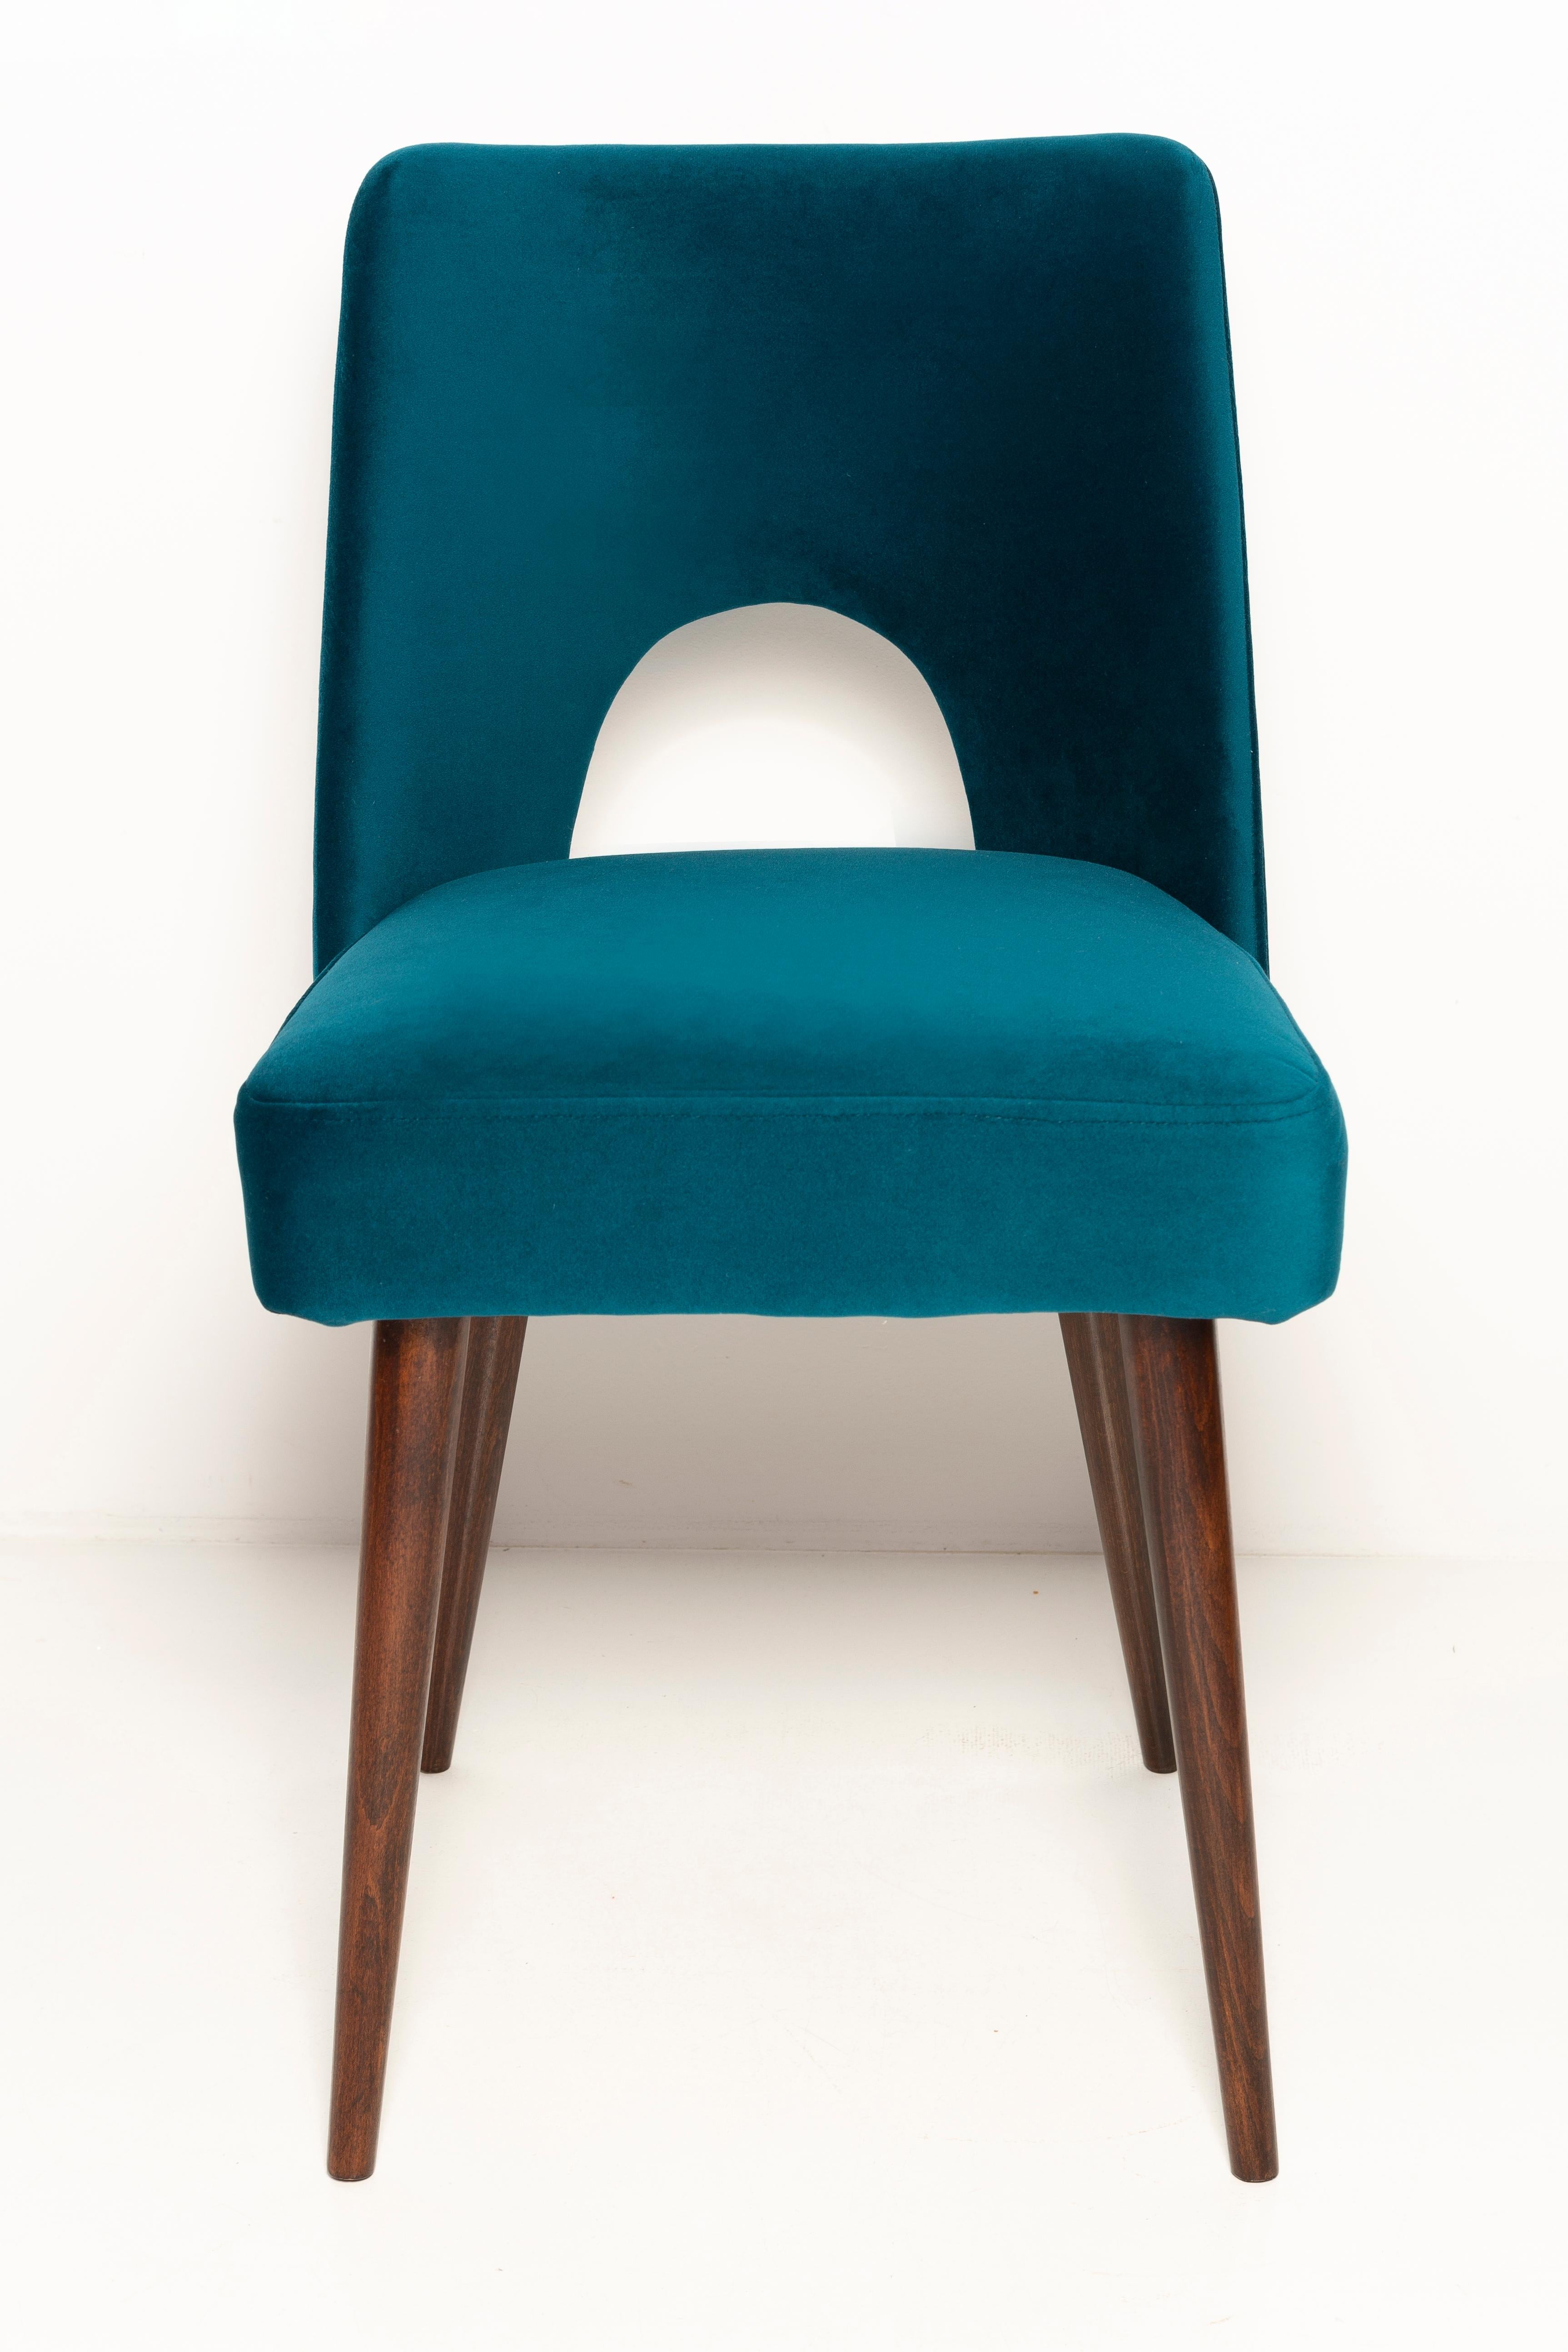 20th Century Mid-Century Emerald Green Velvet 'Shell' Chair, Europe, 1960s For Sale